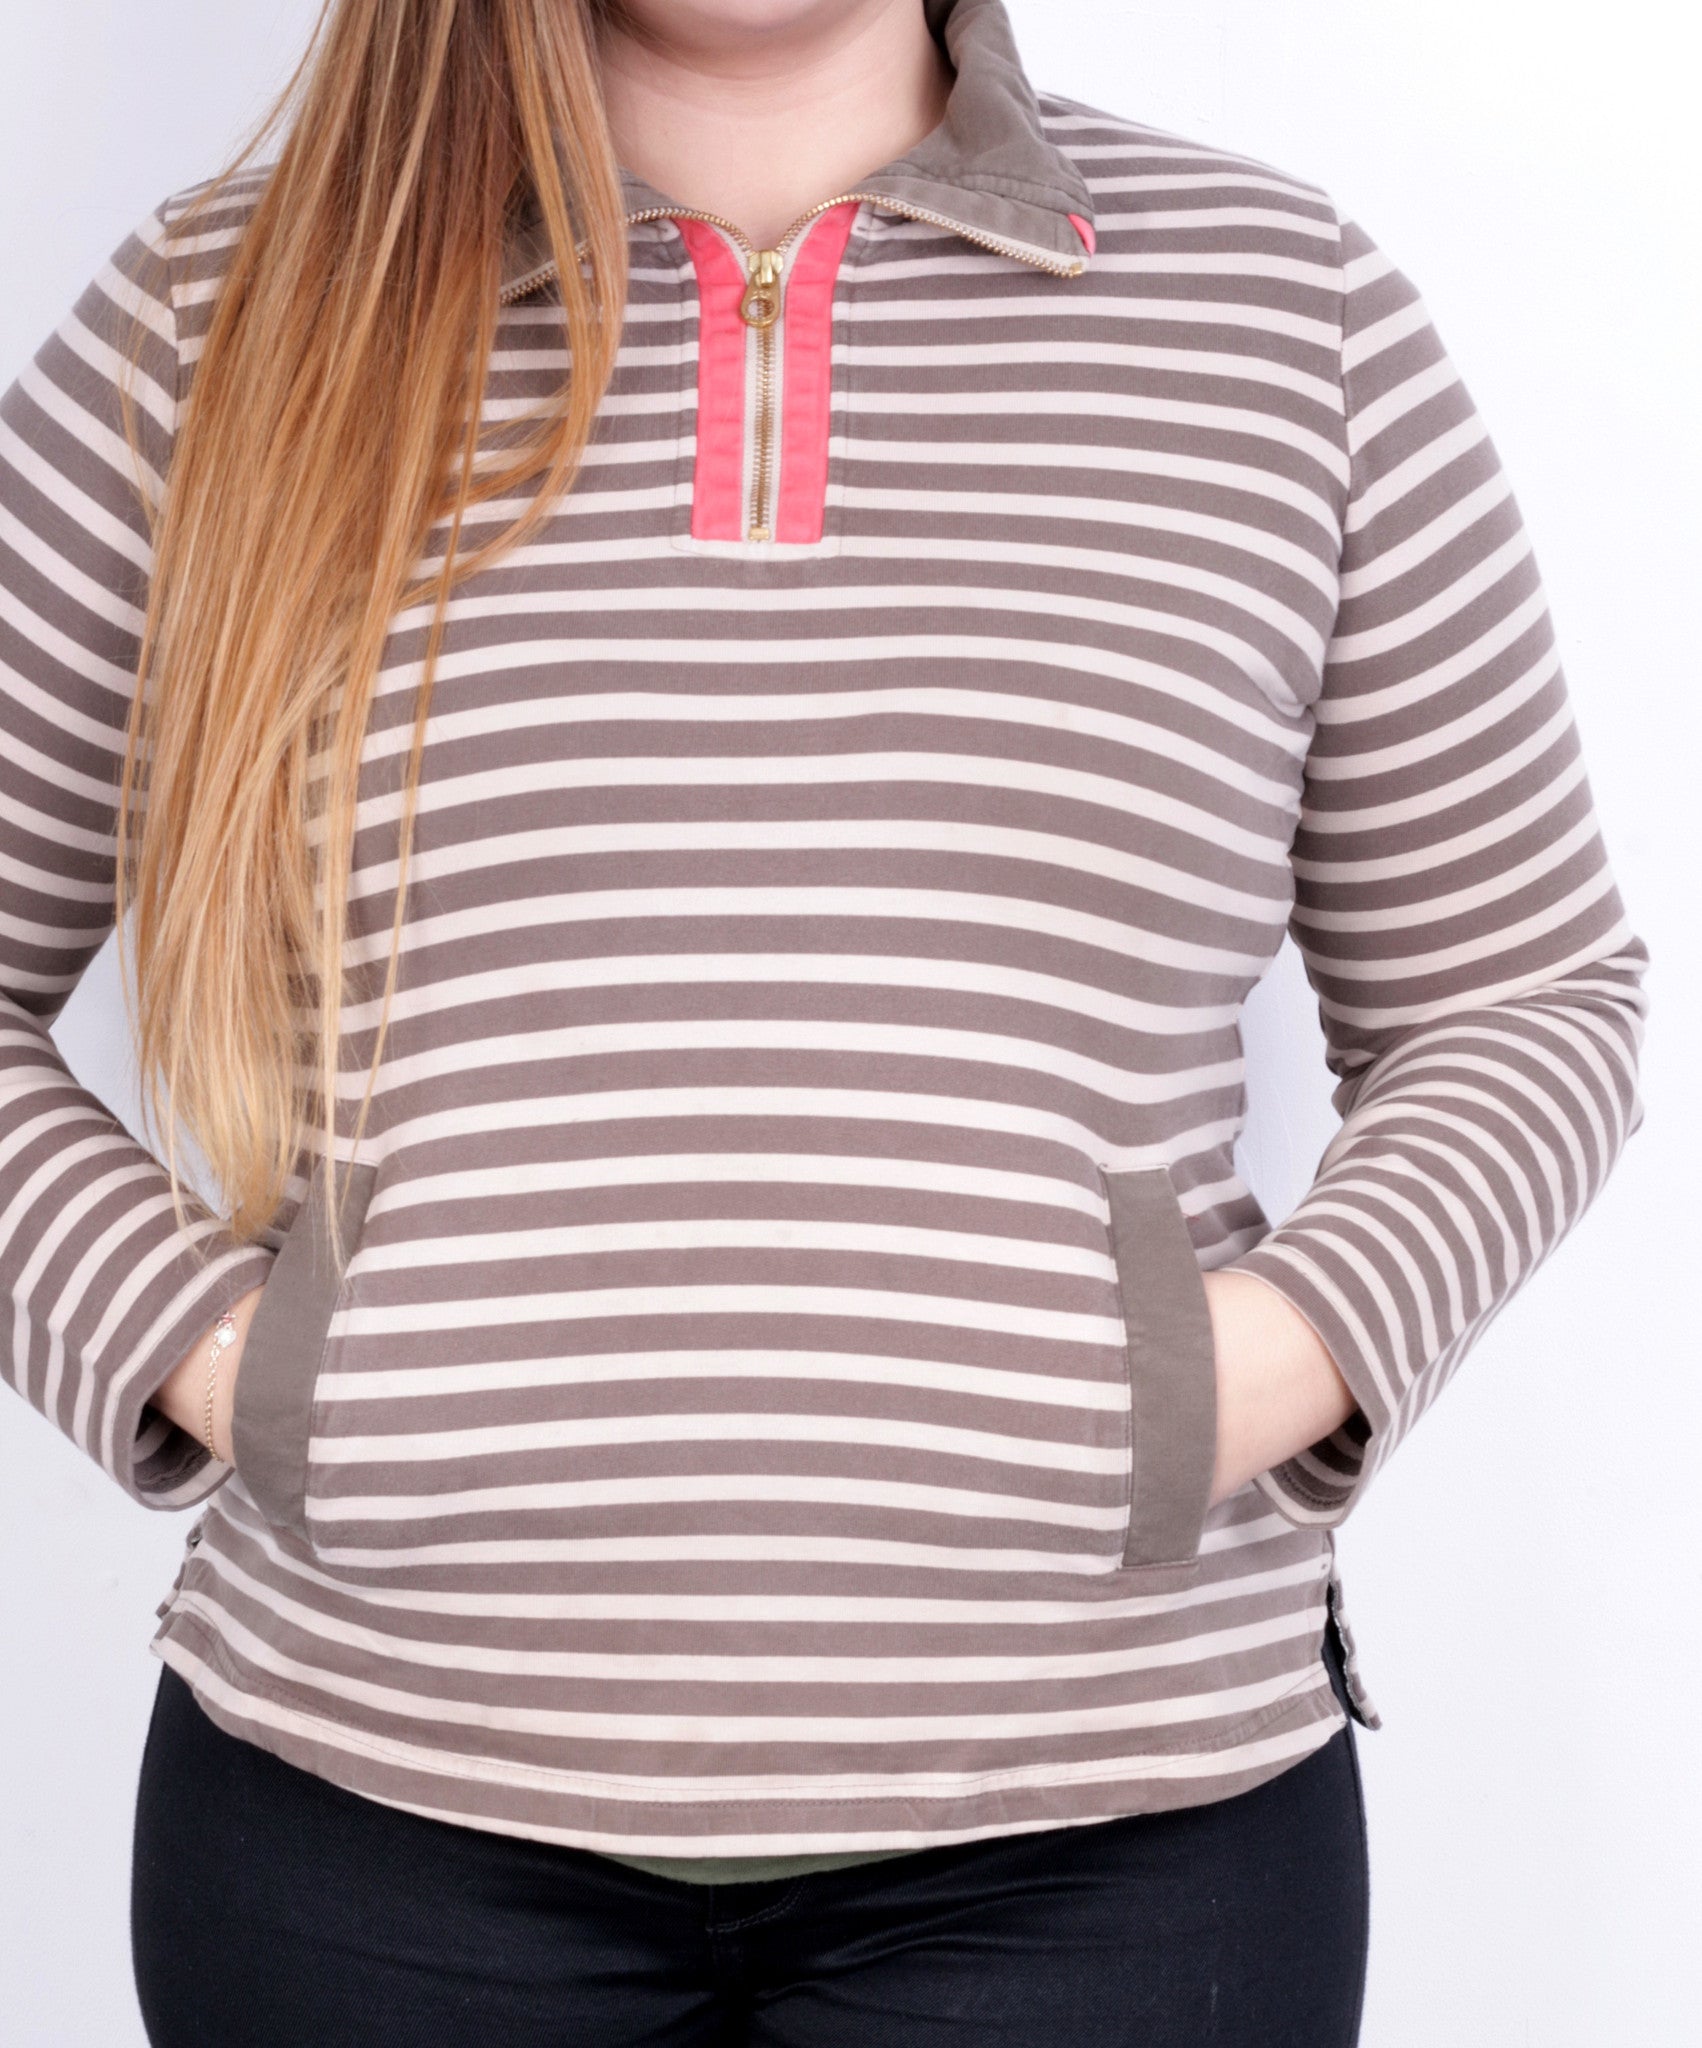 Tom Joule Womens L Sweatshirt Striped Brown Beige Zip Neck Cotton - RetrospectClothes